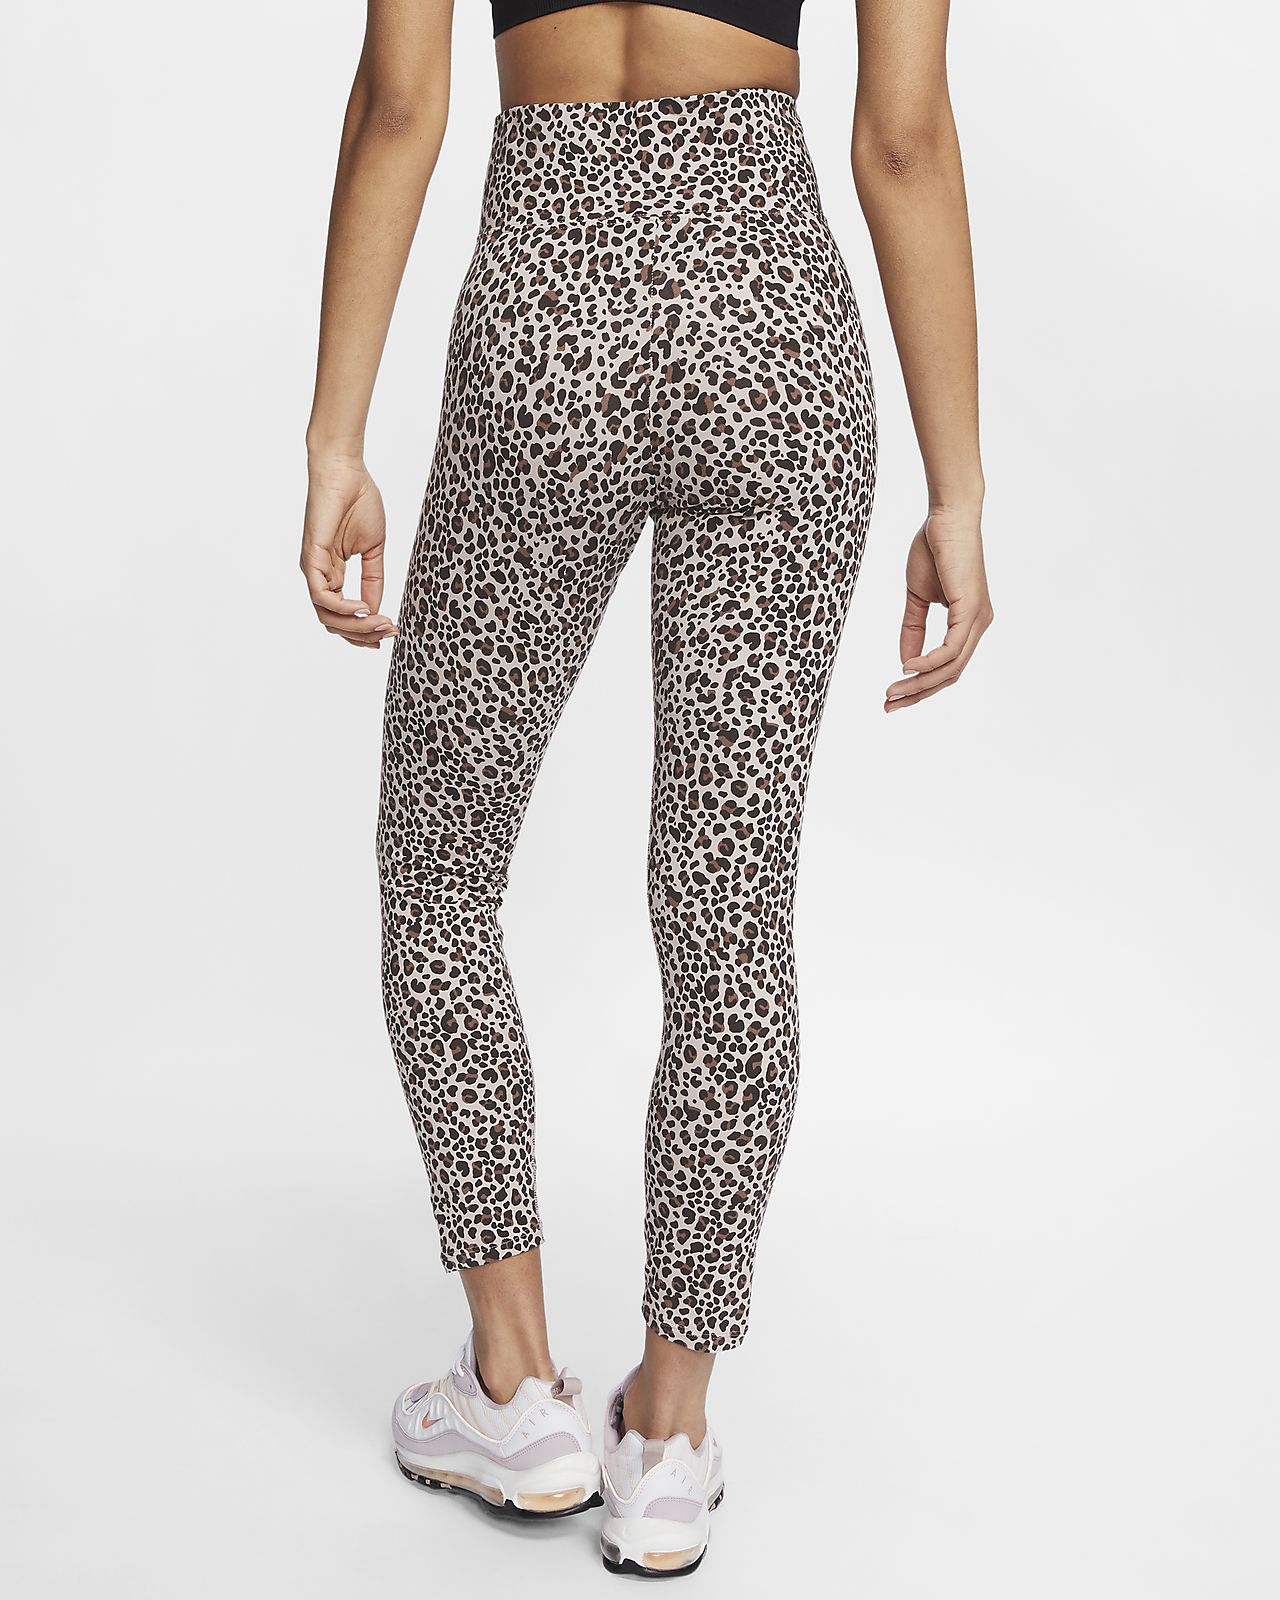 nike grey leopard print leggings